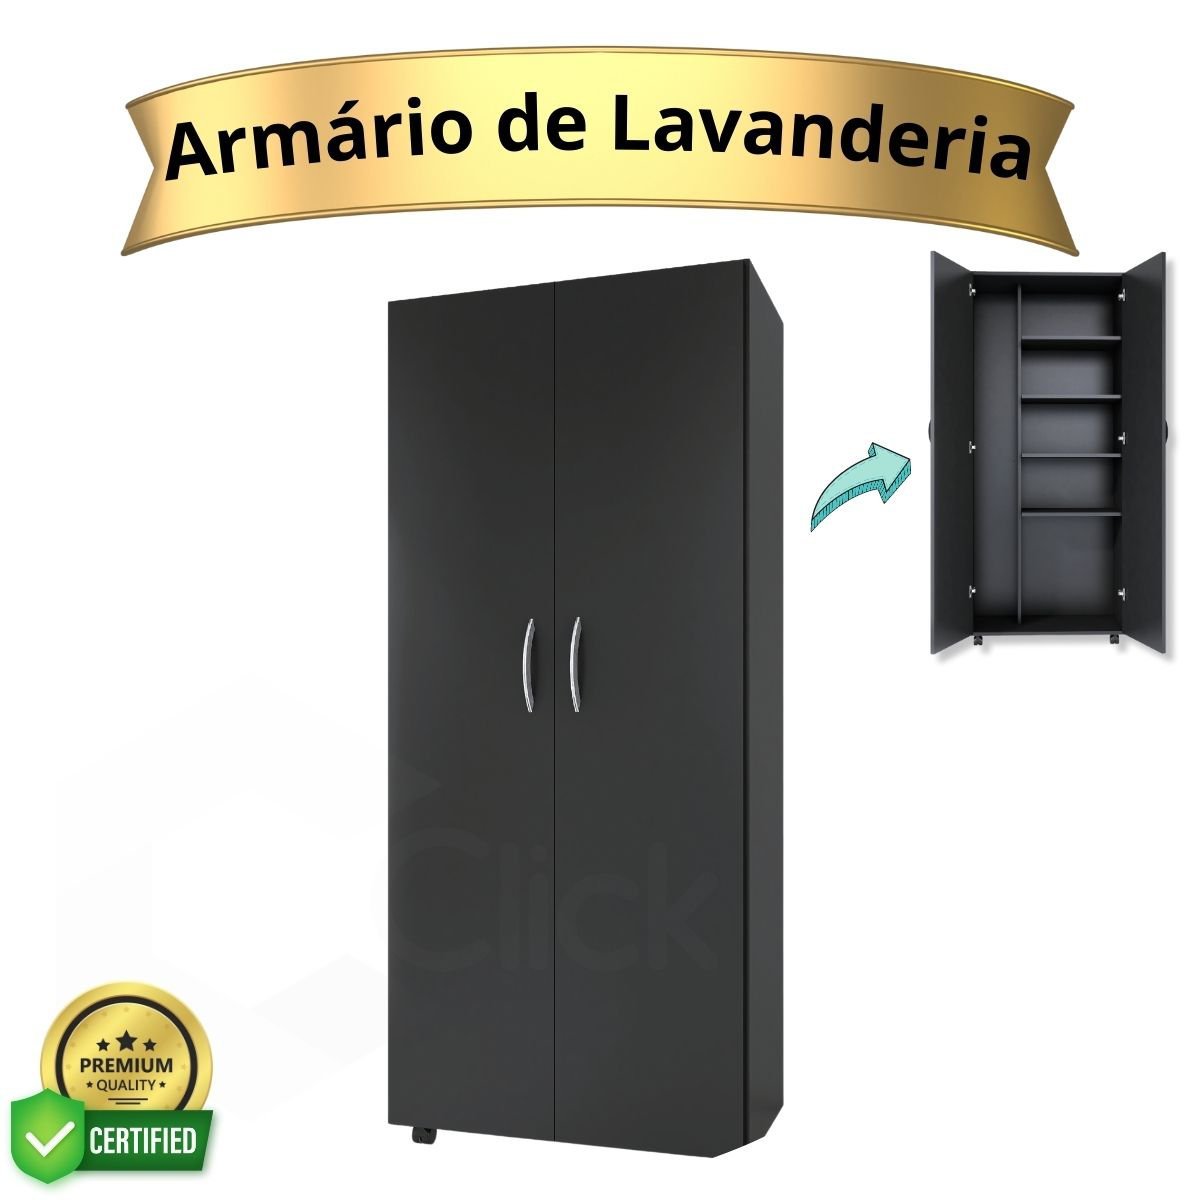 Armário para Lavanderia 2 Portas Multiuso Área Serviço ClickForte Armário Lavanderia Preto - 4